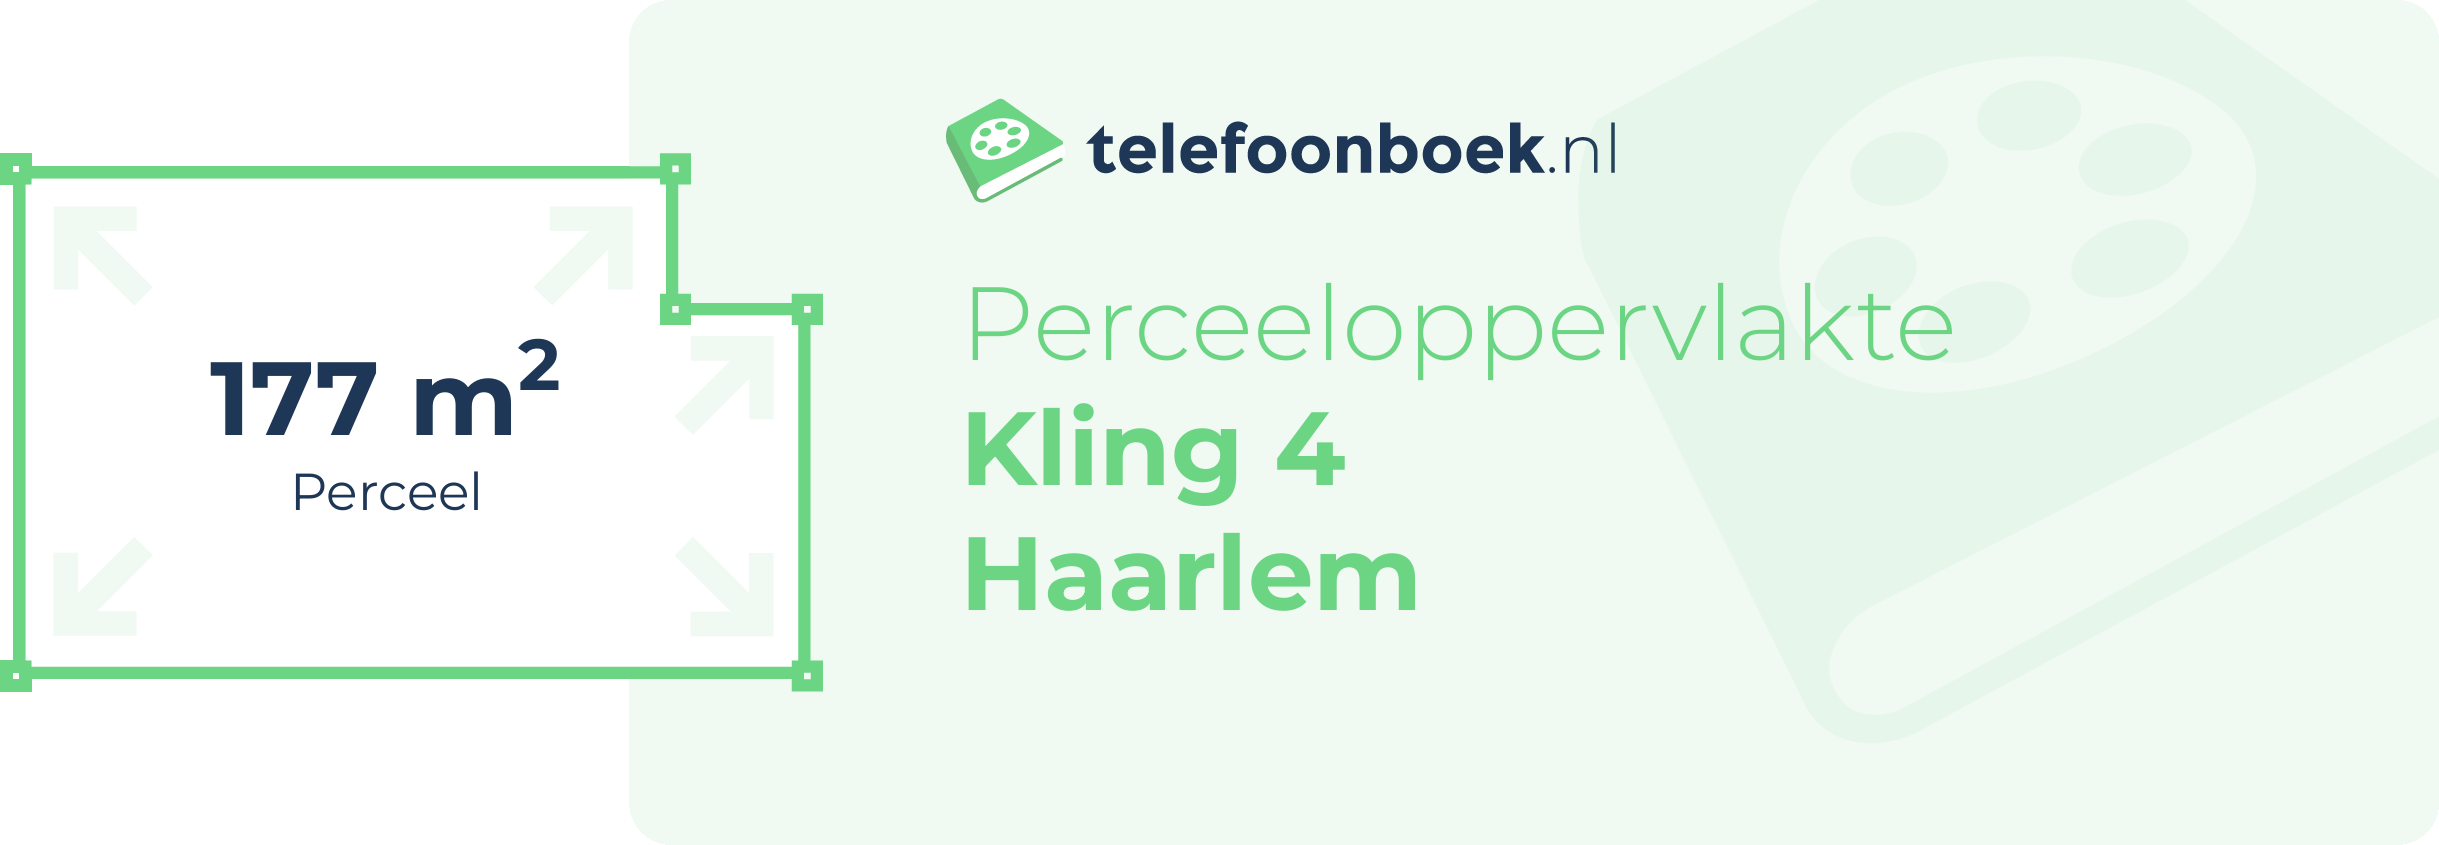 Perceeloppervlakte Kling 4 Haarlem